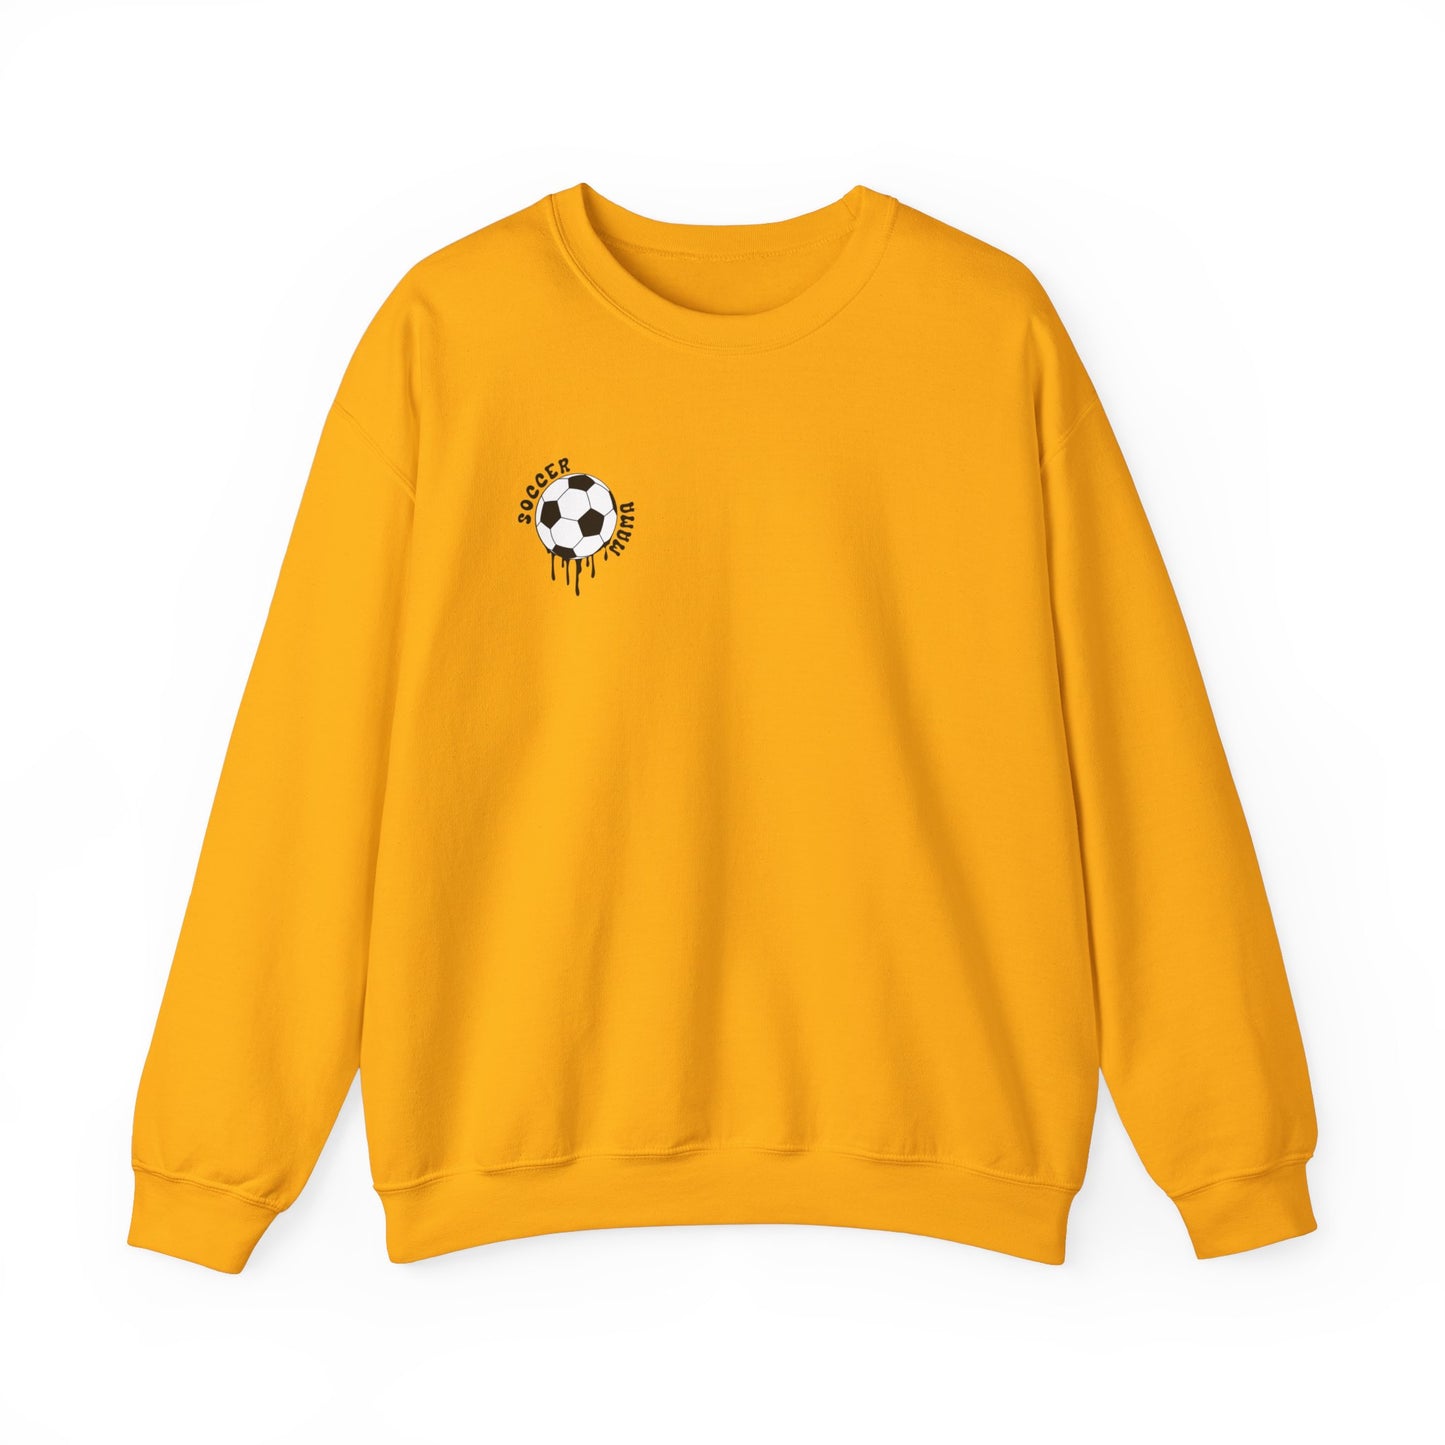 Loud Mouth Soccer Mama Sweatshirt (black letters)